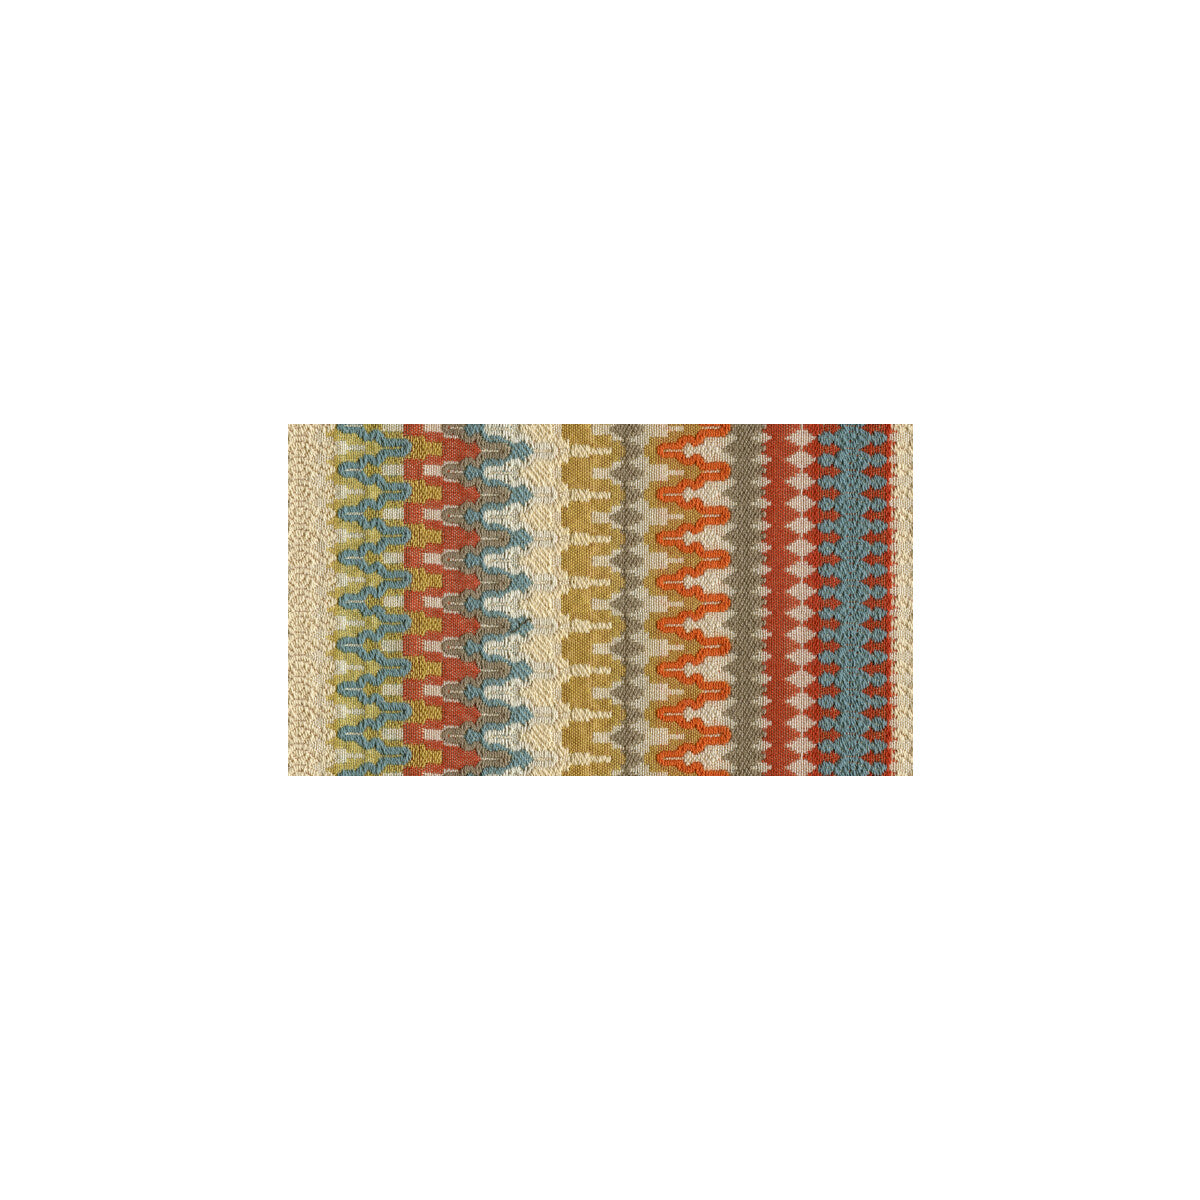 Kravet Design fabric in 32530-512 color - pattern 32530.512.0 - by Kravet Design in the Gis collection